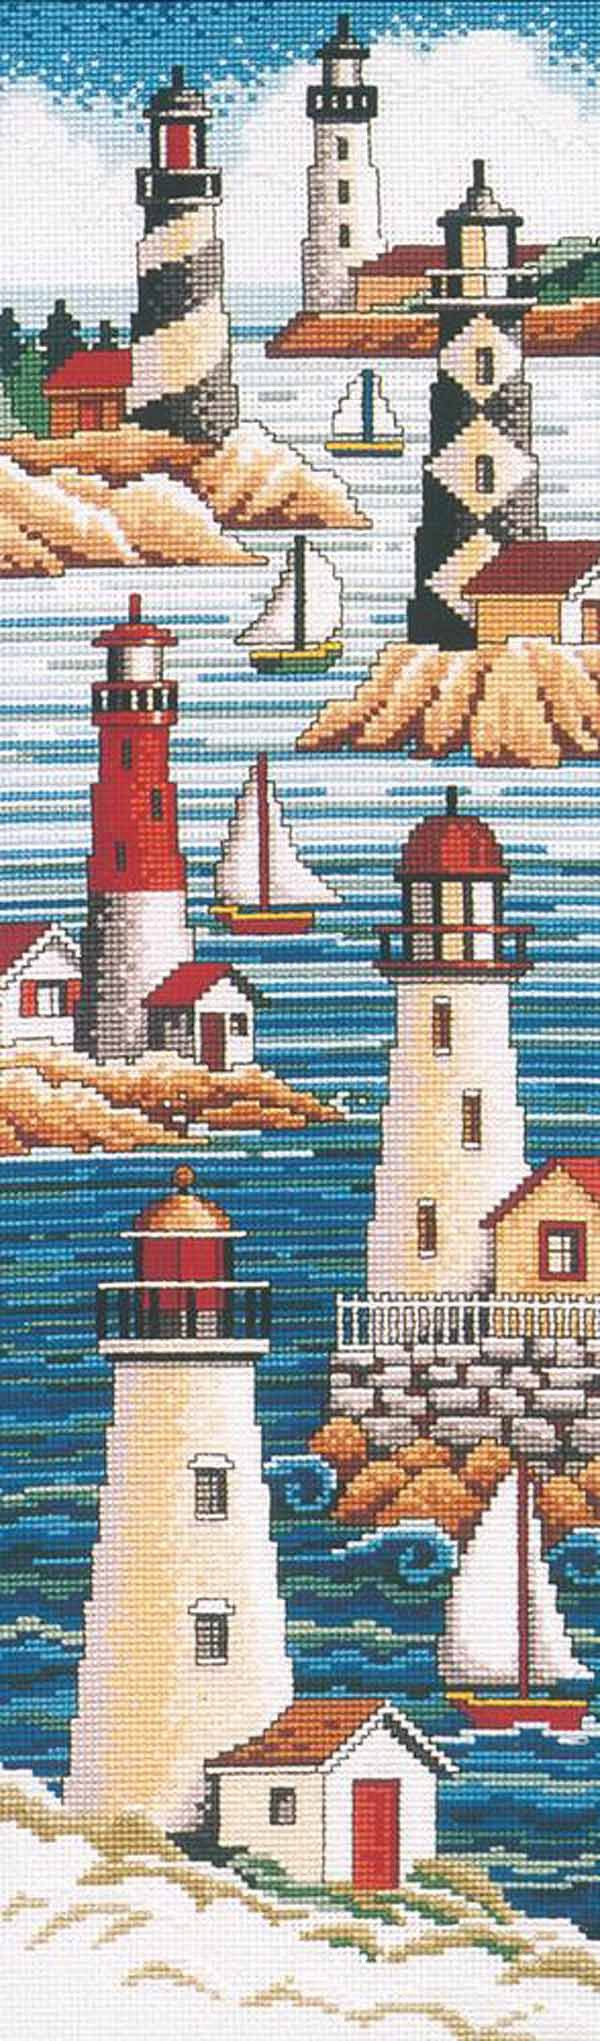 Lighthouses Cross Stitch Kit by Janlynn